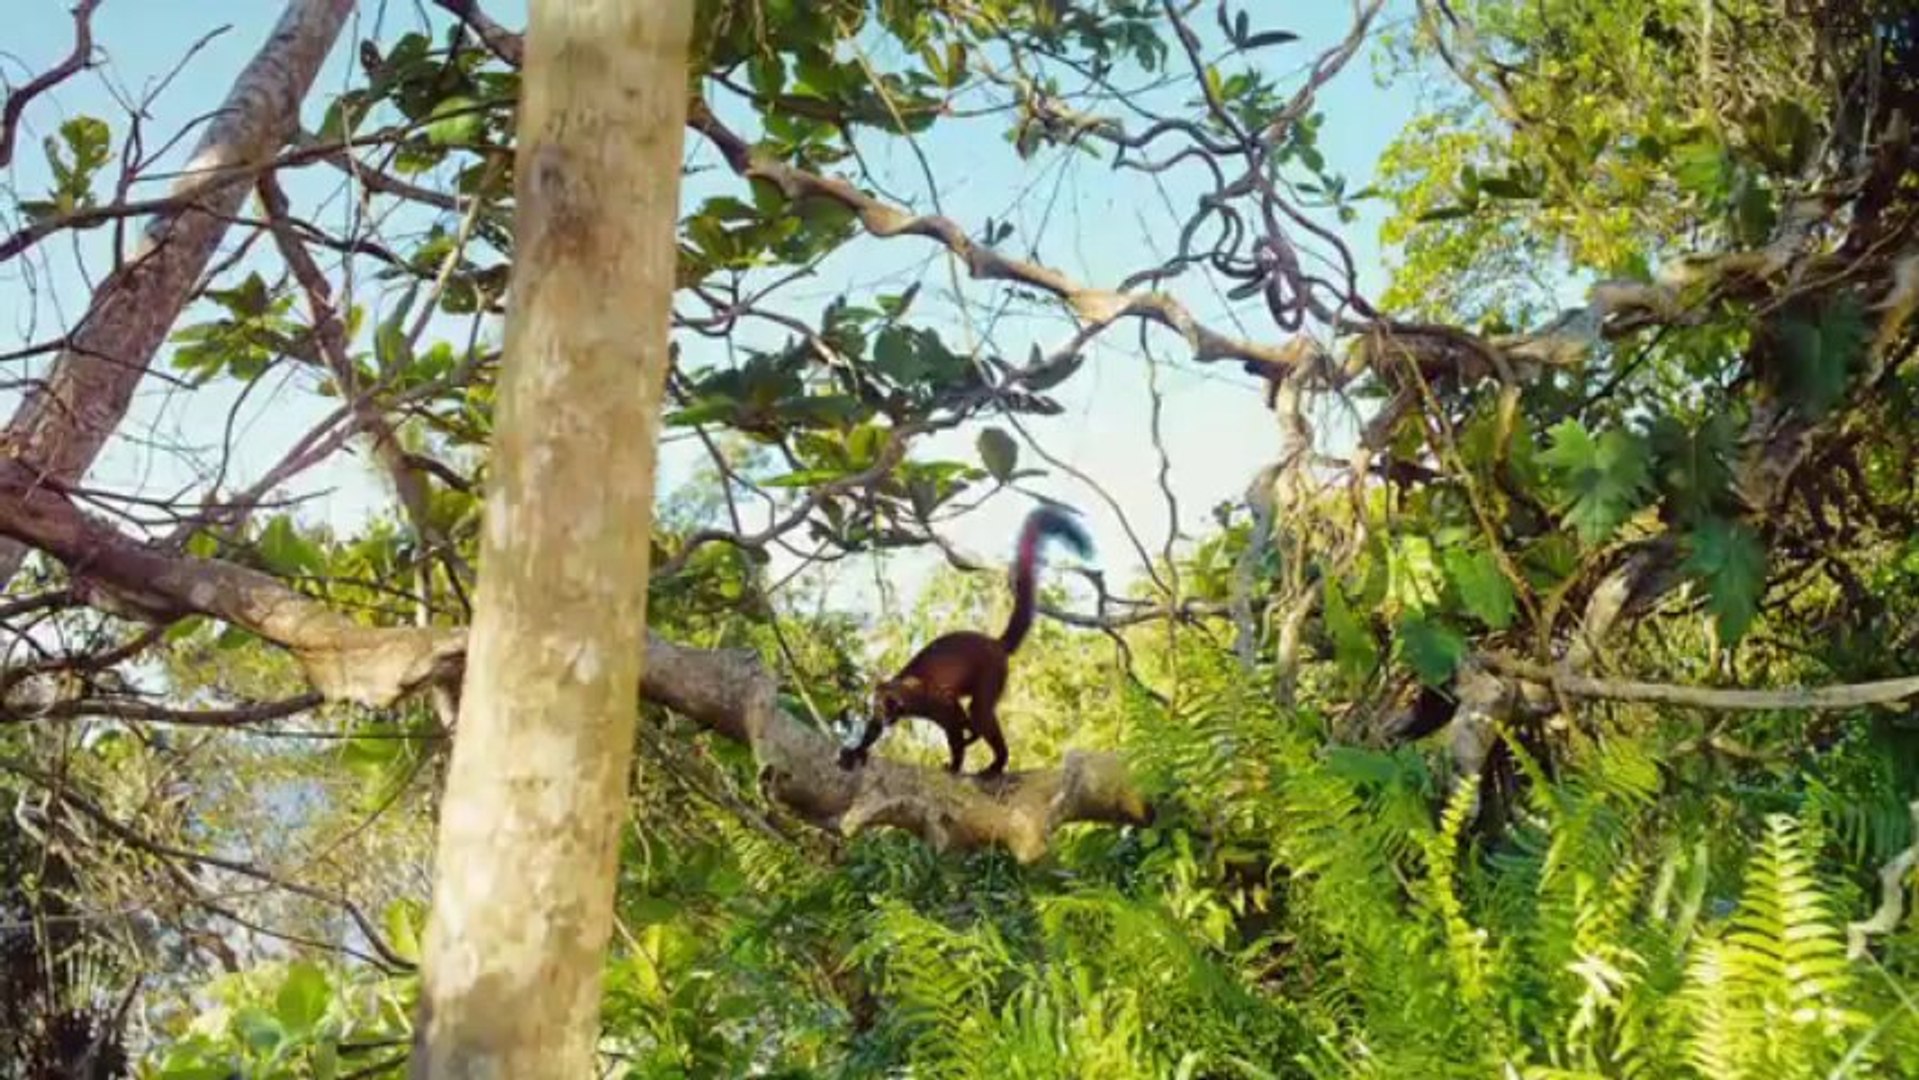 Island of Lemurs- Madagascar Official Trailer #1 (2014) - Nature Documentary HD